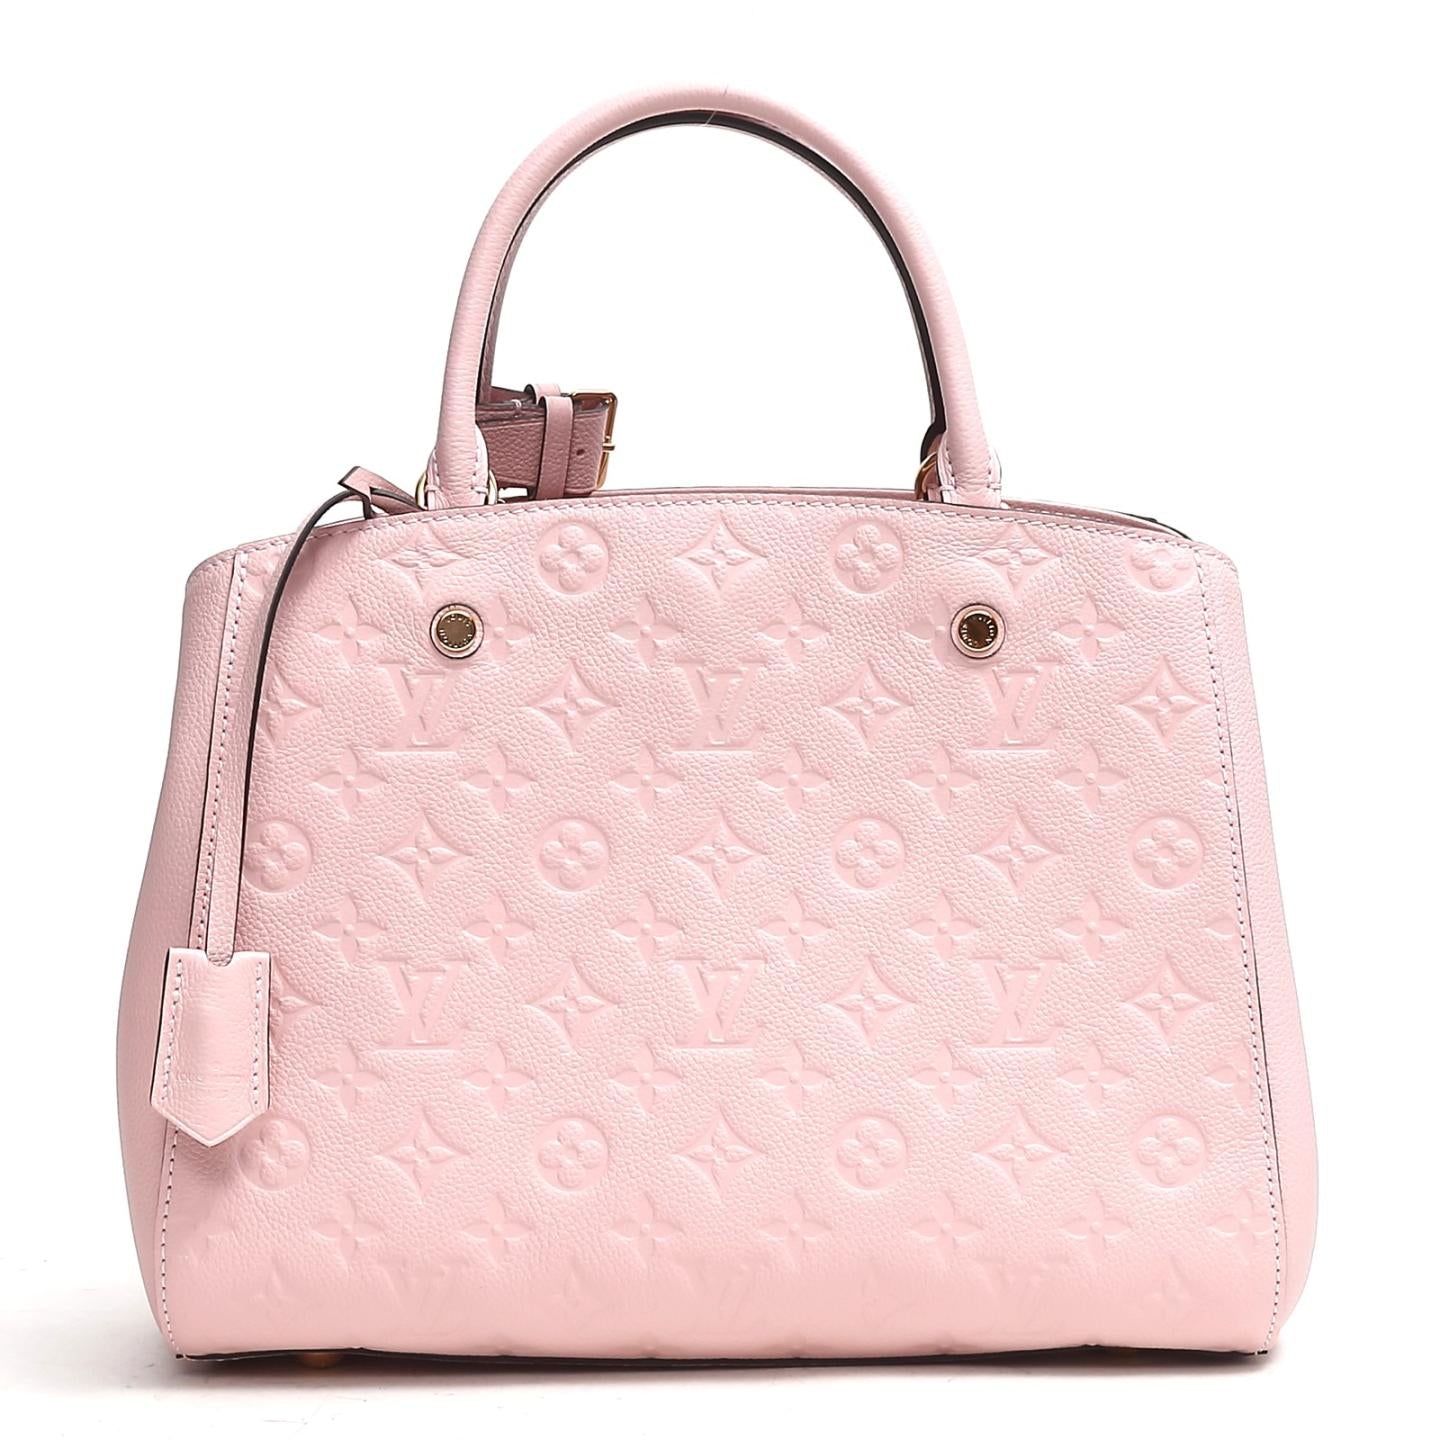 Top 10 Pink Luxury Designer Handbags from Louis Vuitton, Hermes, Dior ...